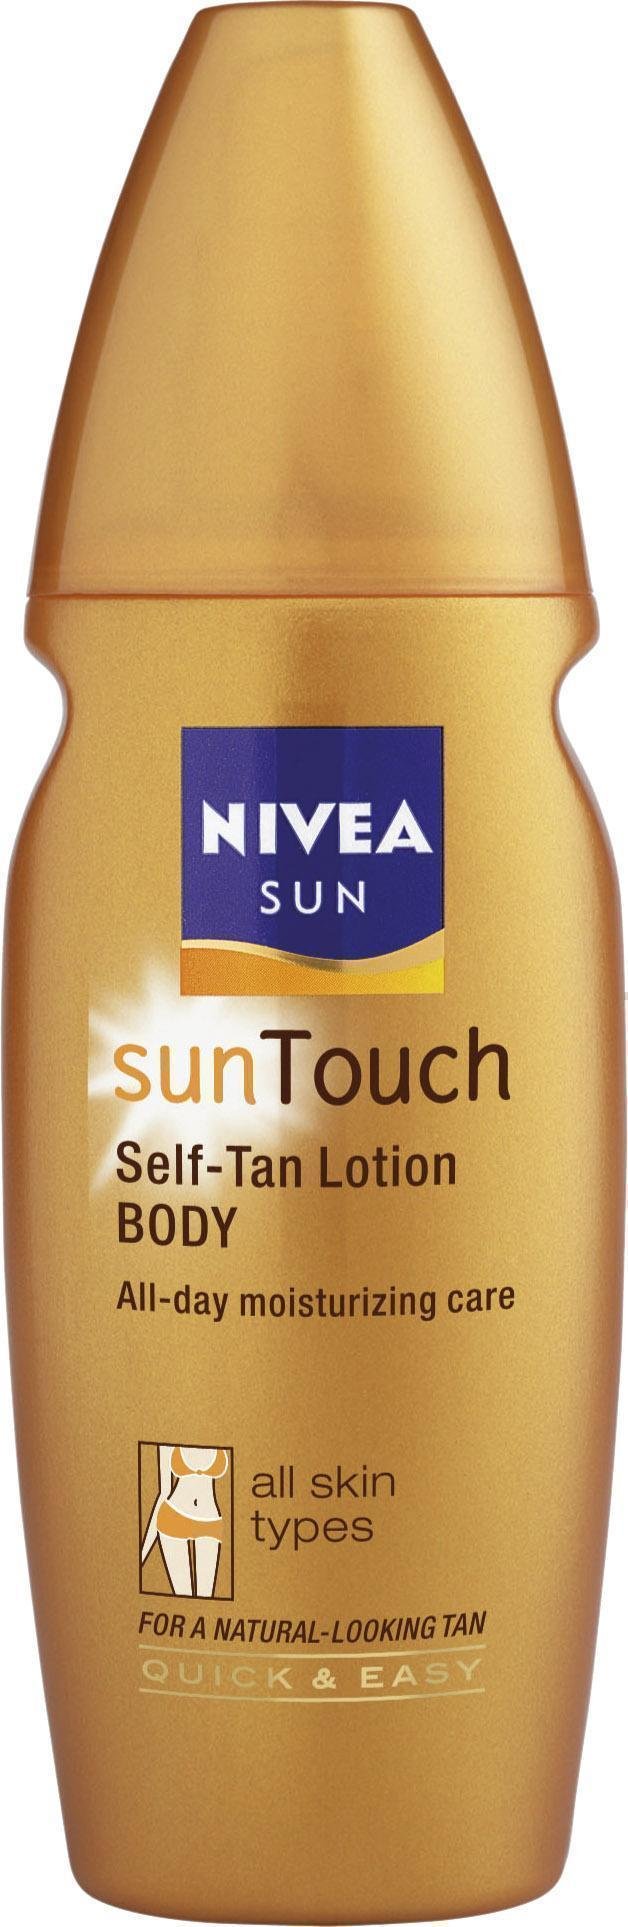 NIVEA, Sun Touch